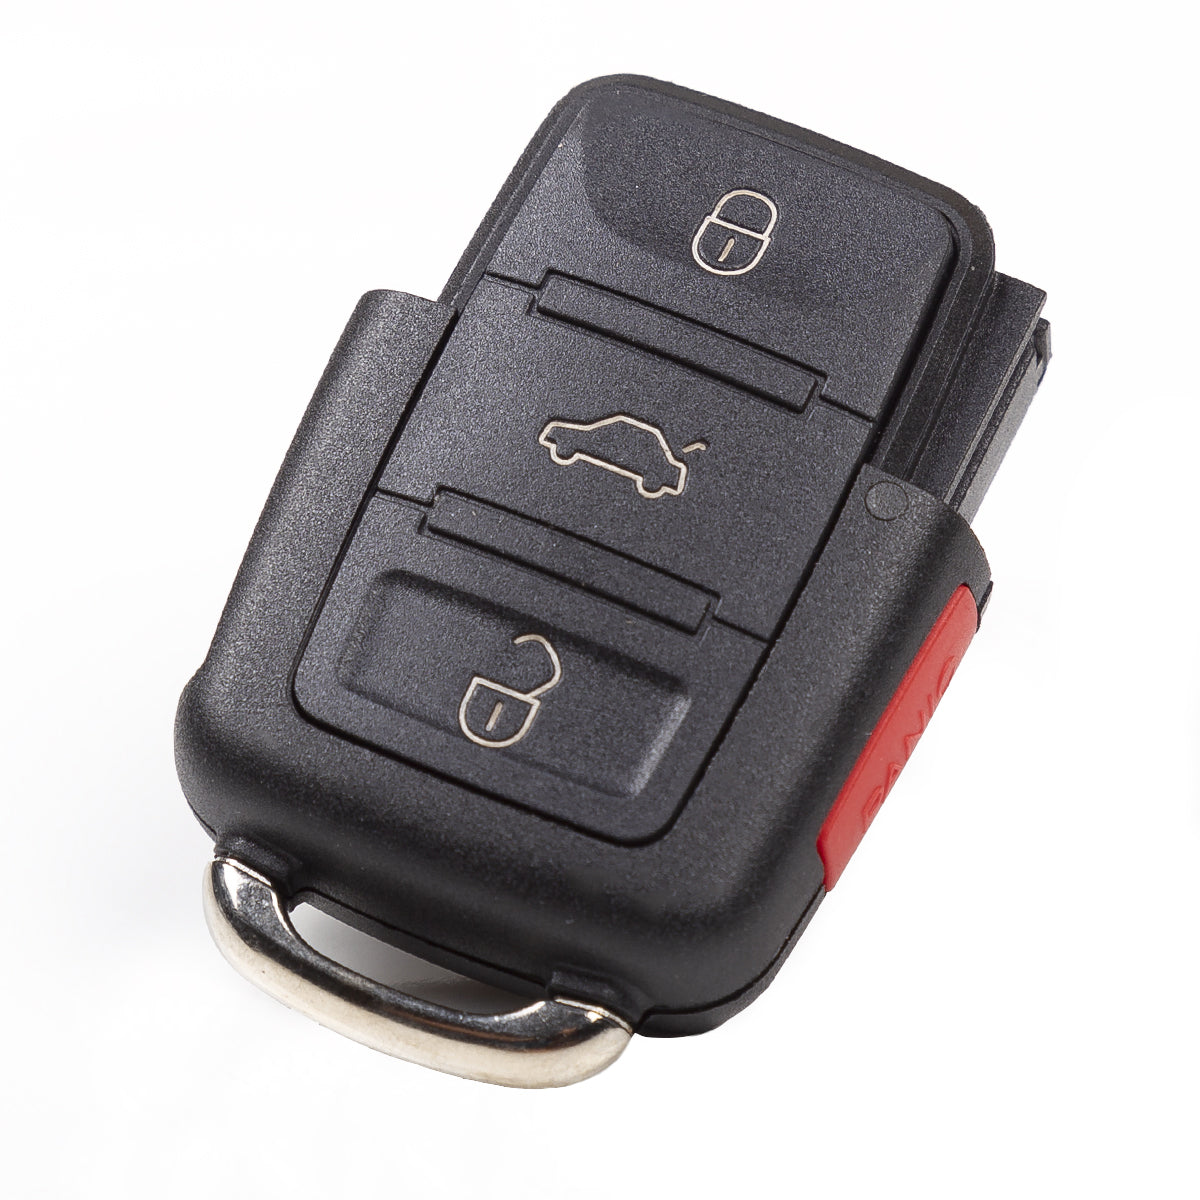 Flip Key Fob-Remote Part Compatible with Volkswagen 1999 - 2012 4B Part# 1J0 959 753DC / AM